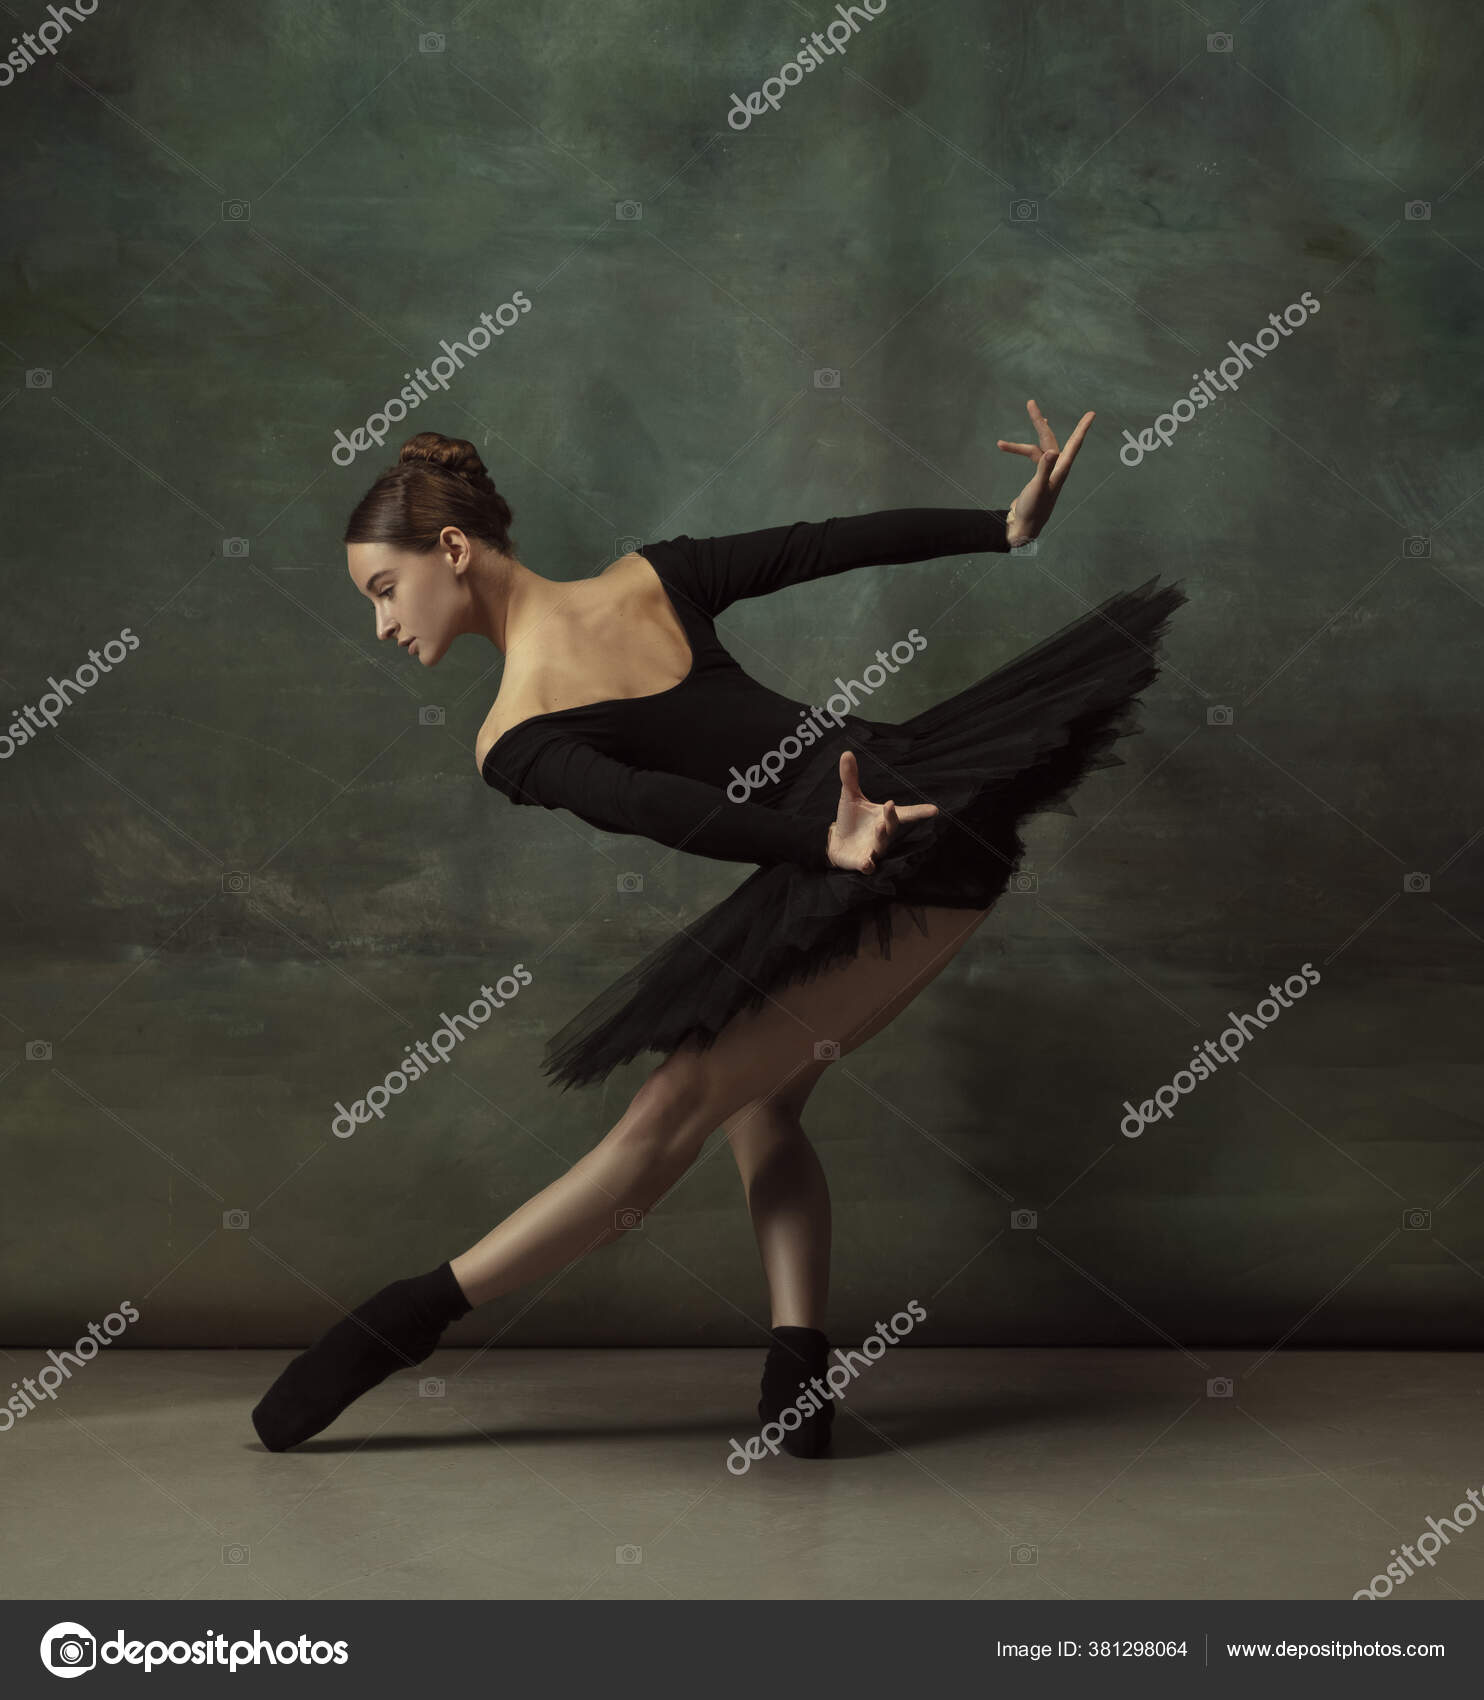 Нежную балерину жёстко отодрал партнёр по танцам